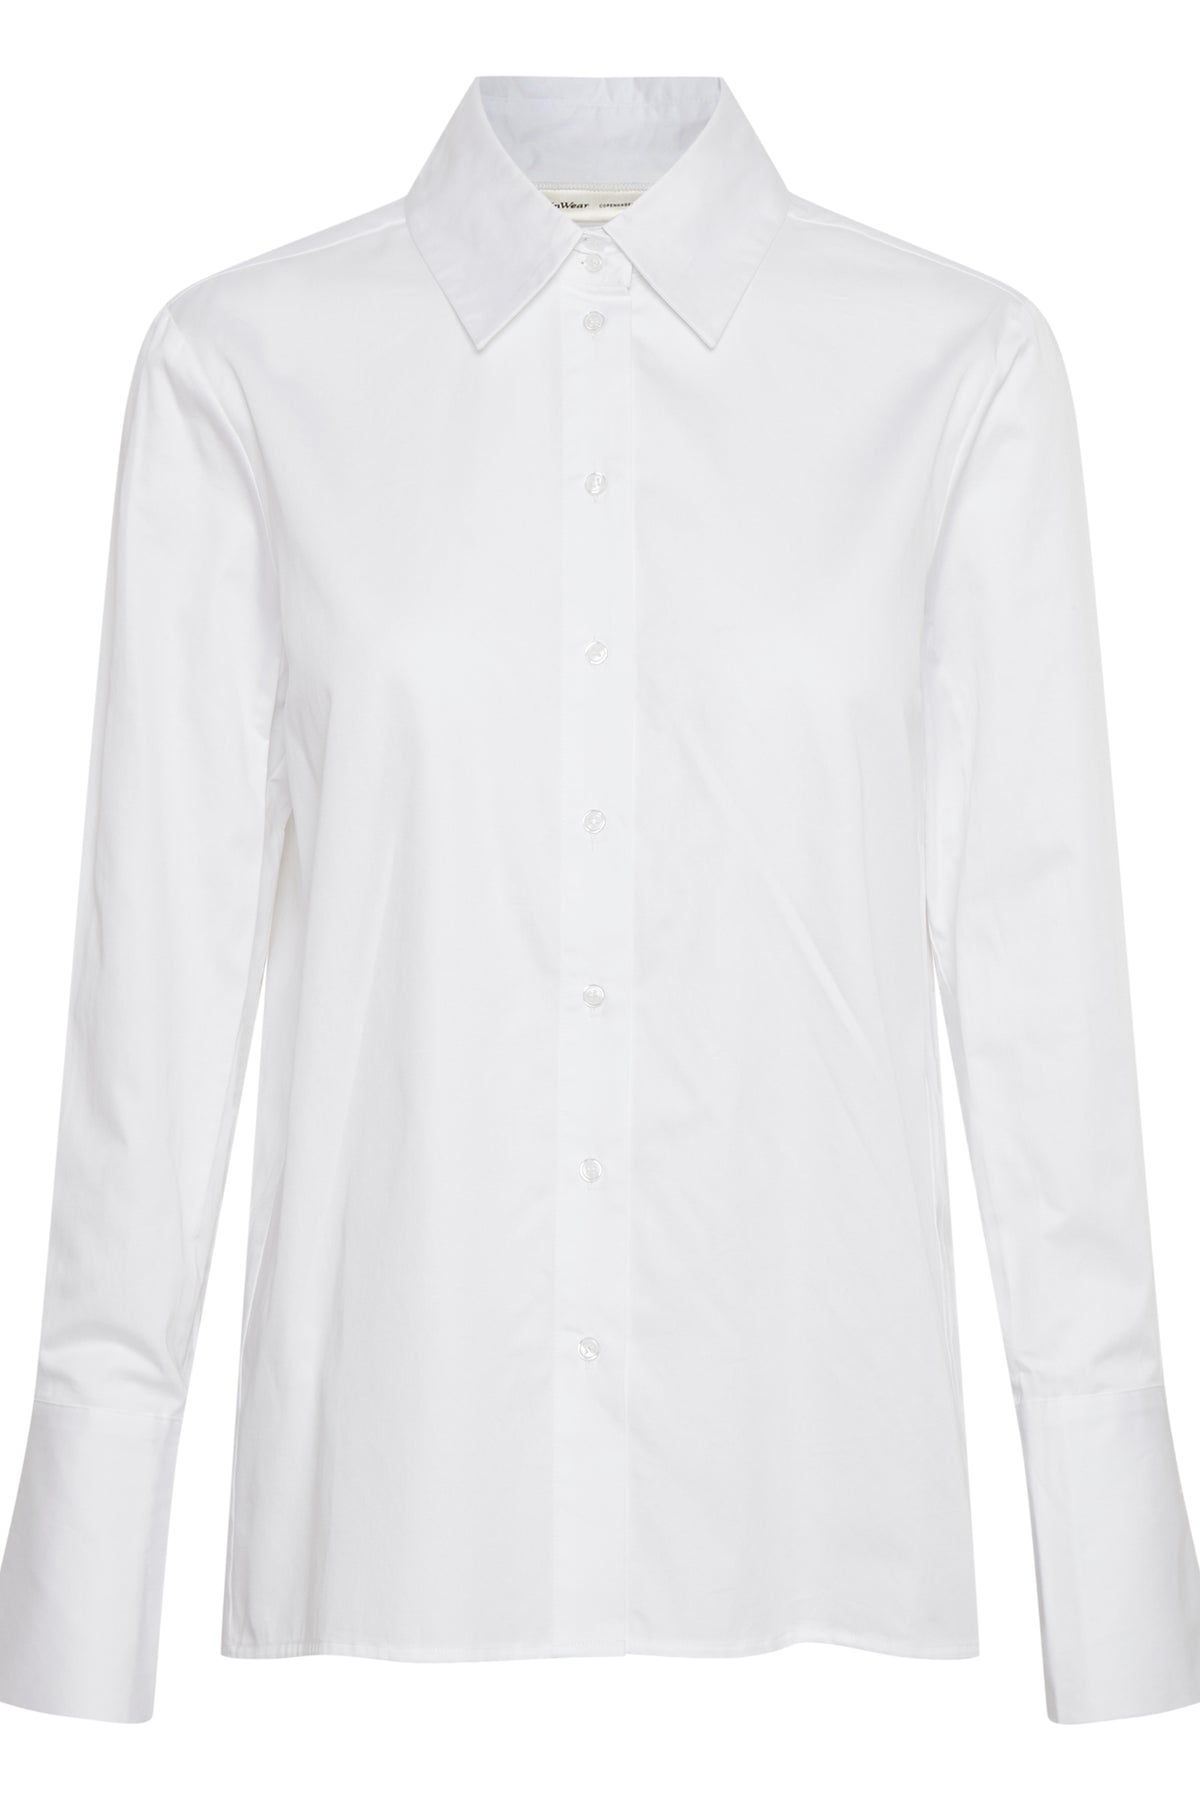 VexIW Shirt - Pure White